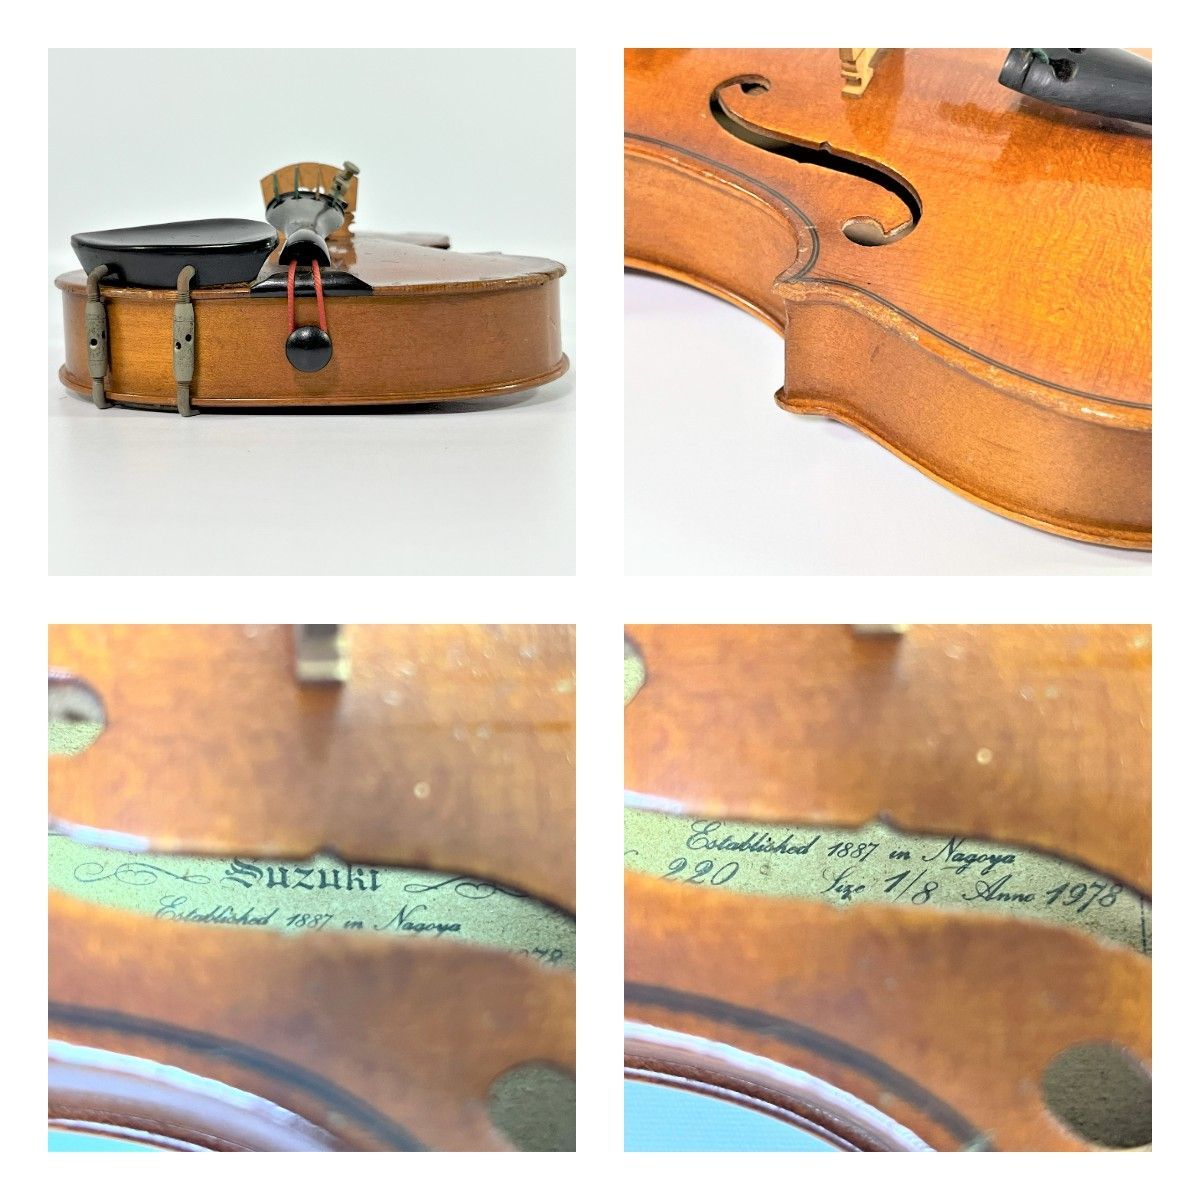 SUZUKI スズキ No.220 1/8 1978年製 バイオリン T.SUGITO製弓付属 